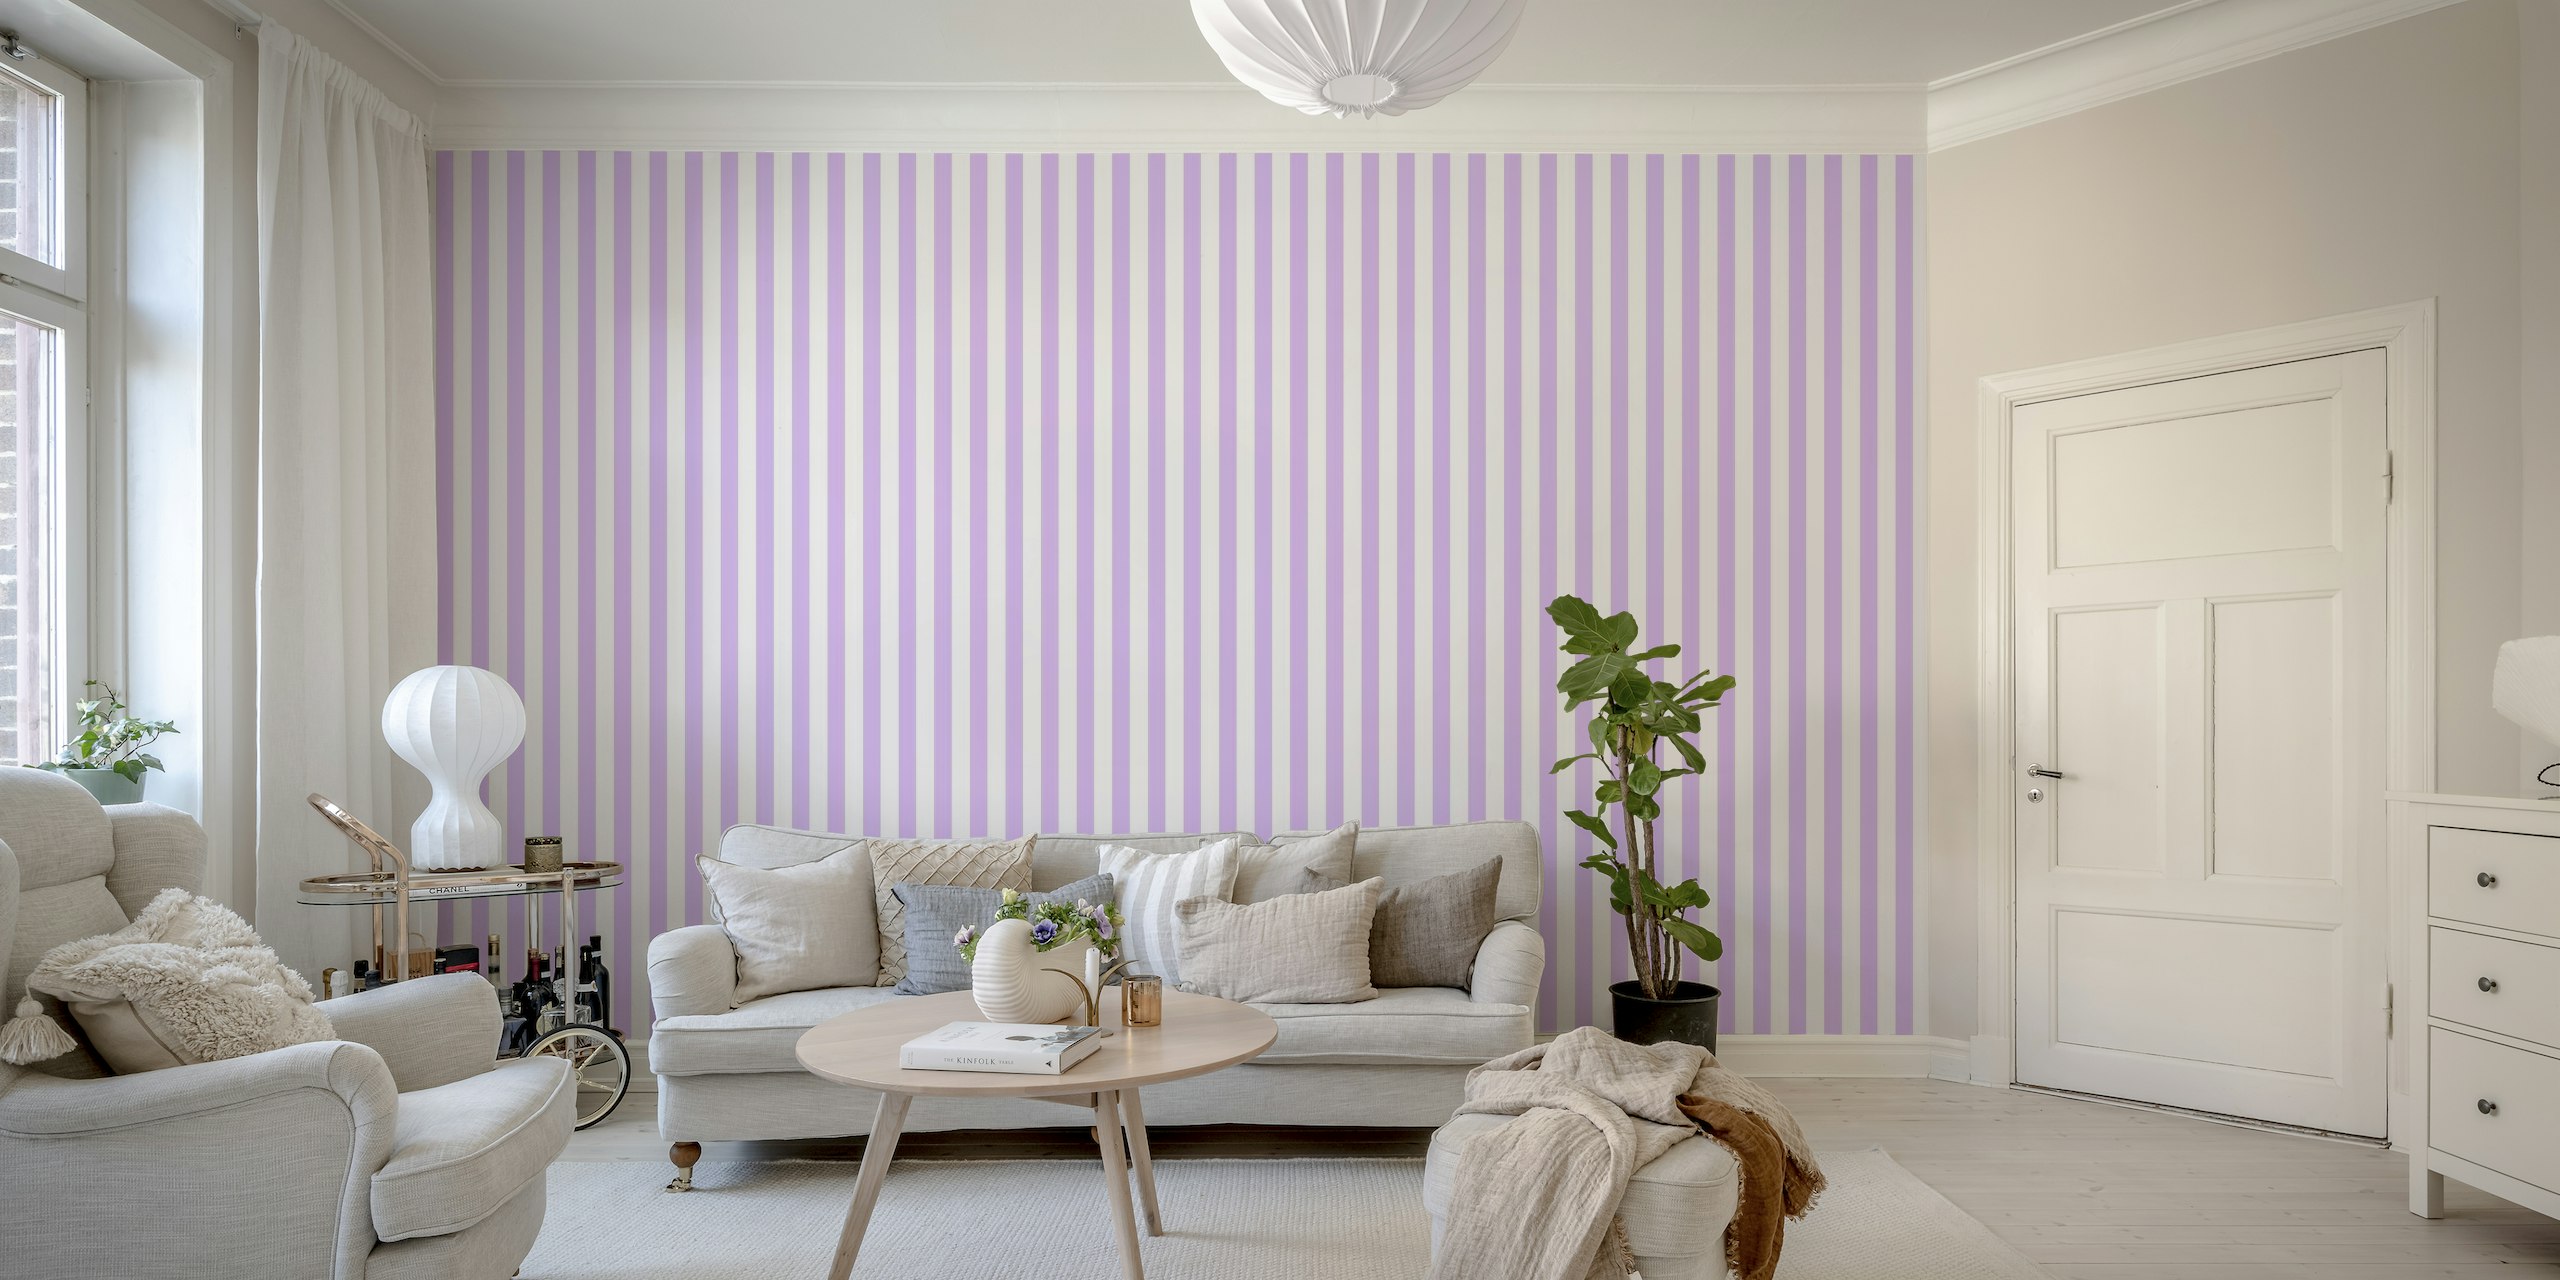 Lilac and white stripes ταπετσαρία